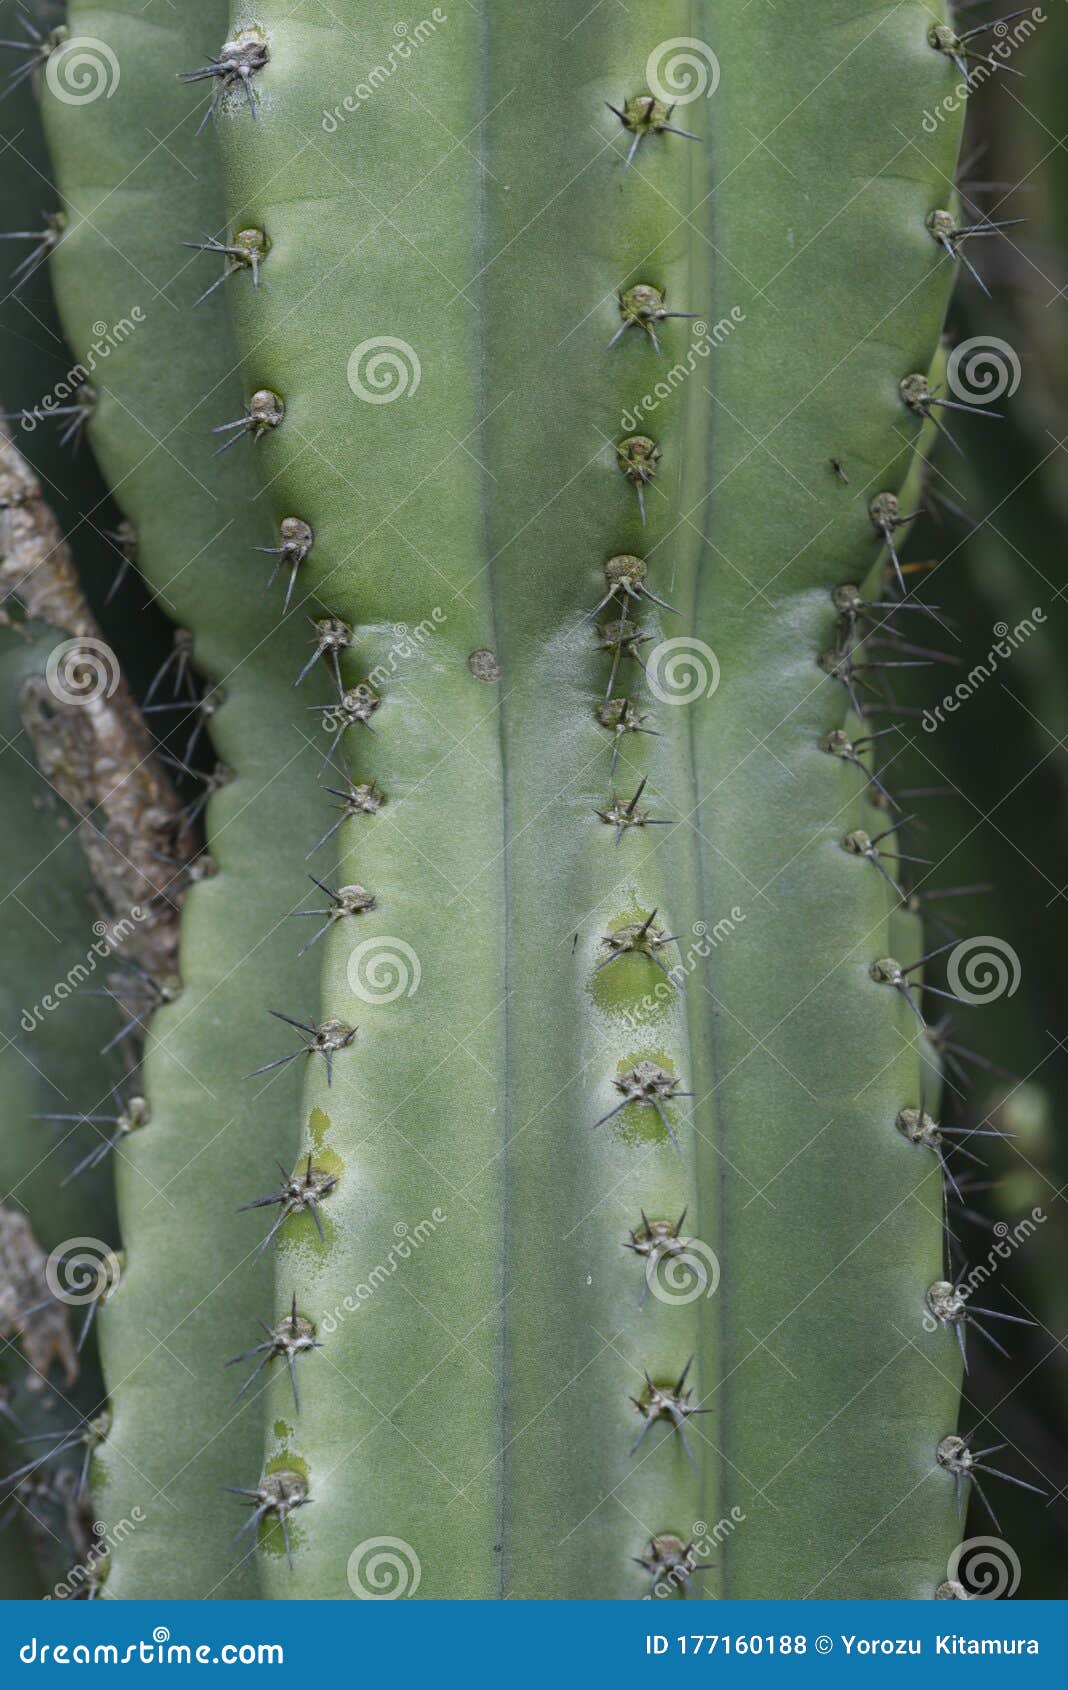 20,20 Cereus Cactus Photos   Free & Royalty Free Stock Photos from ...